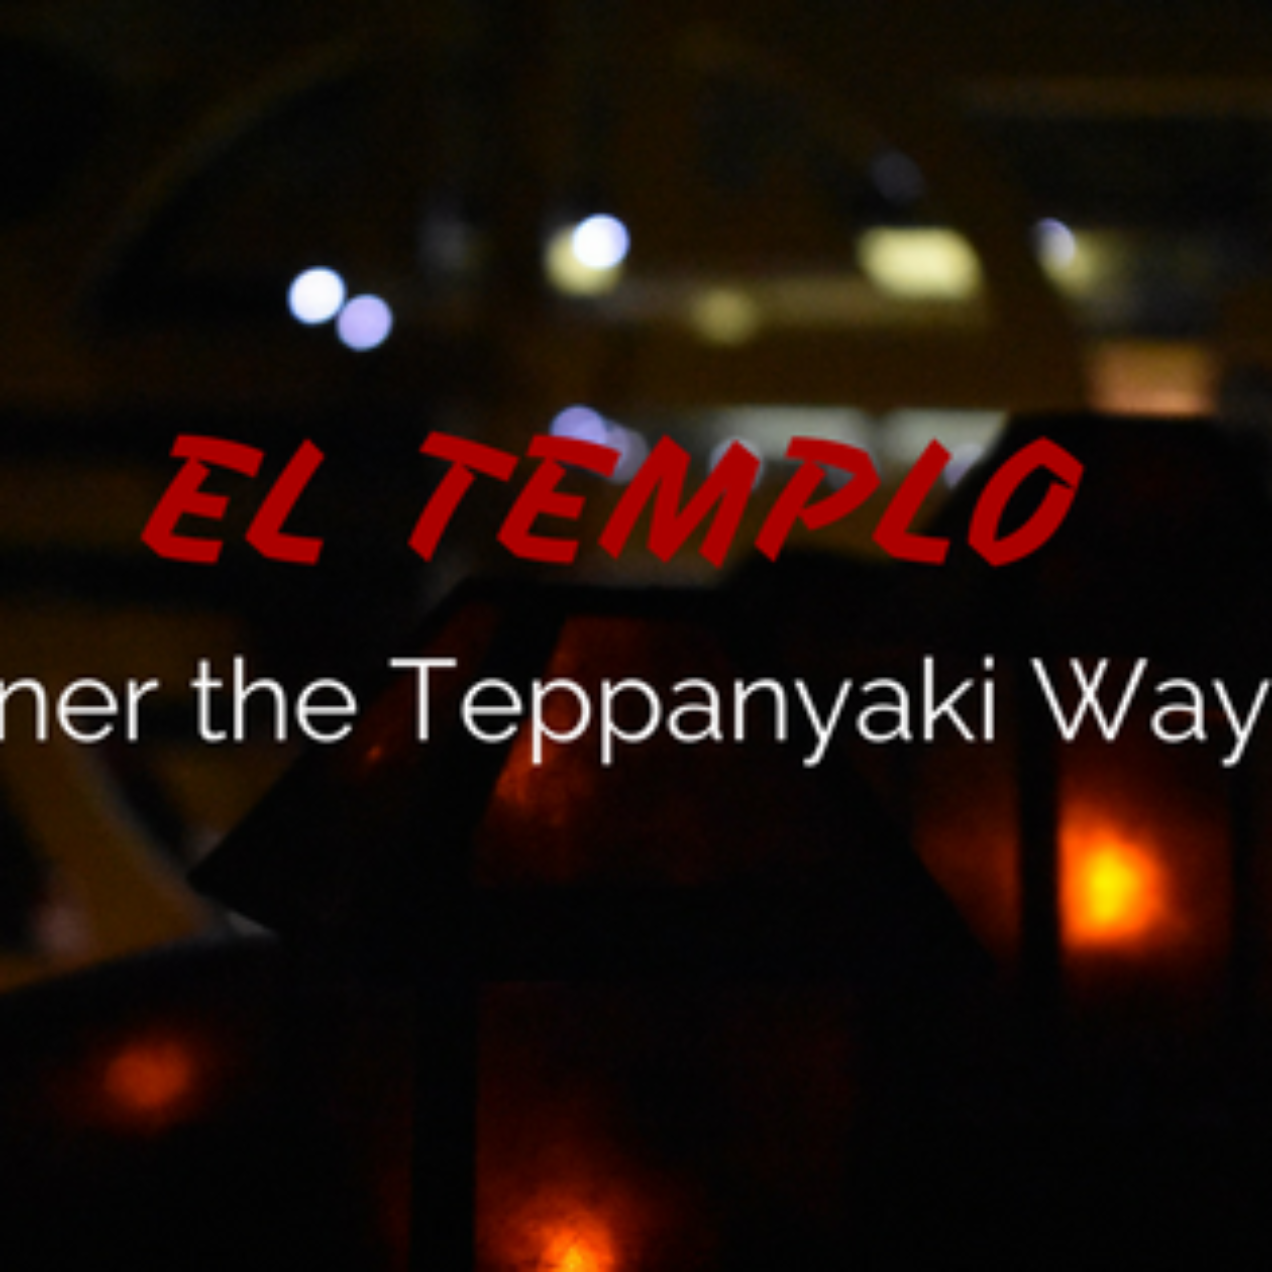 Dinner the Teppanyaki Way!